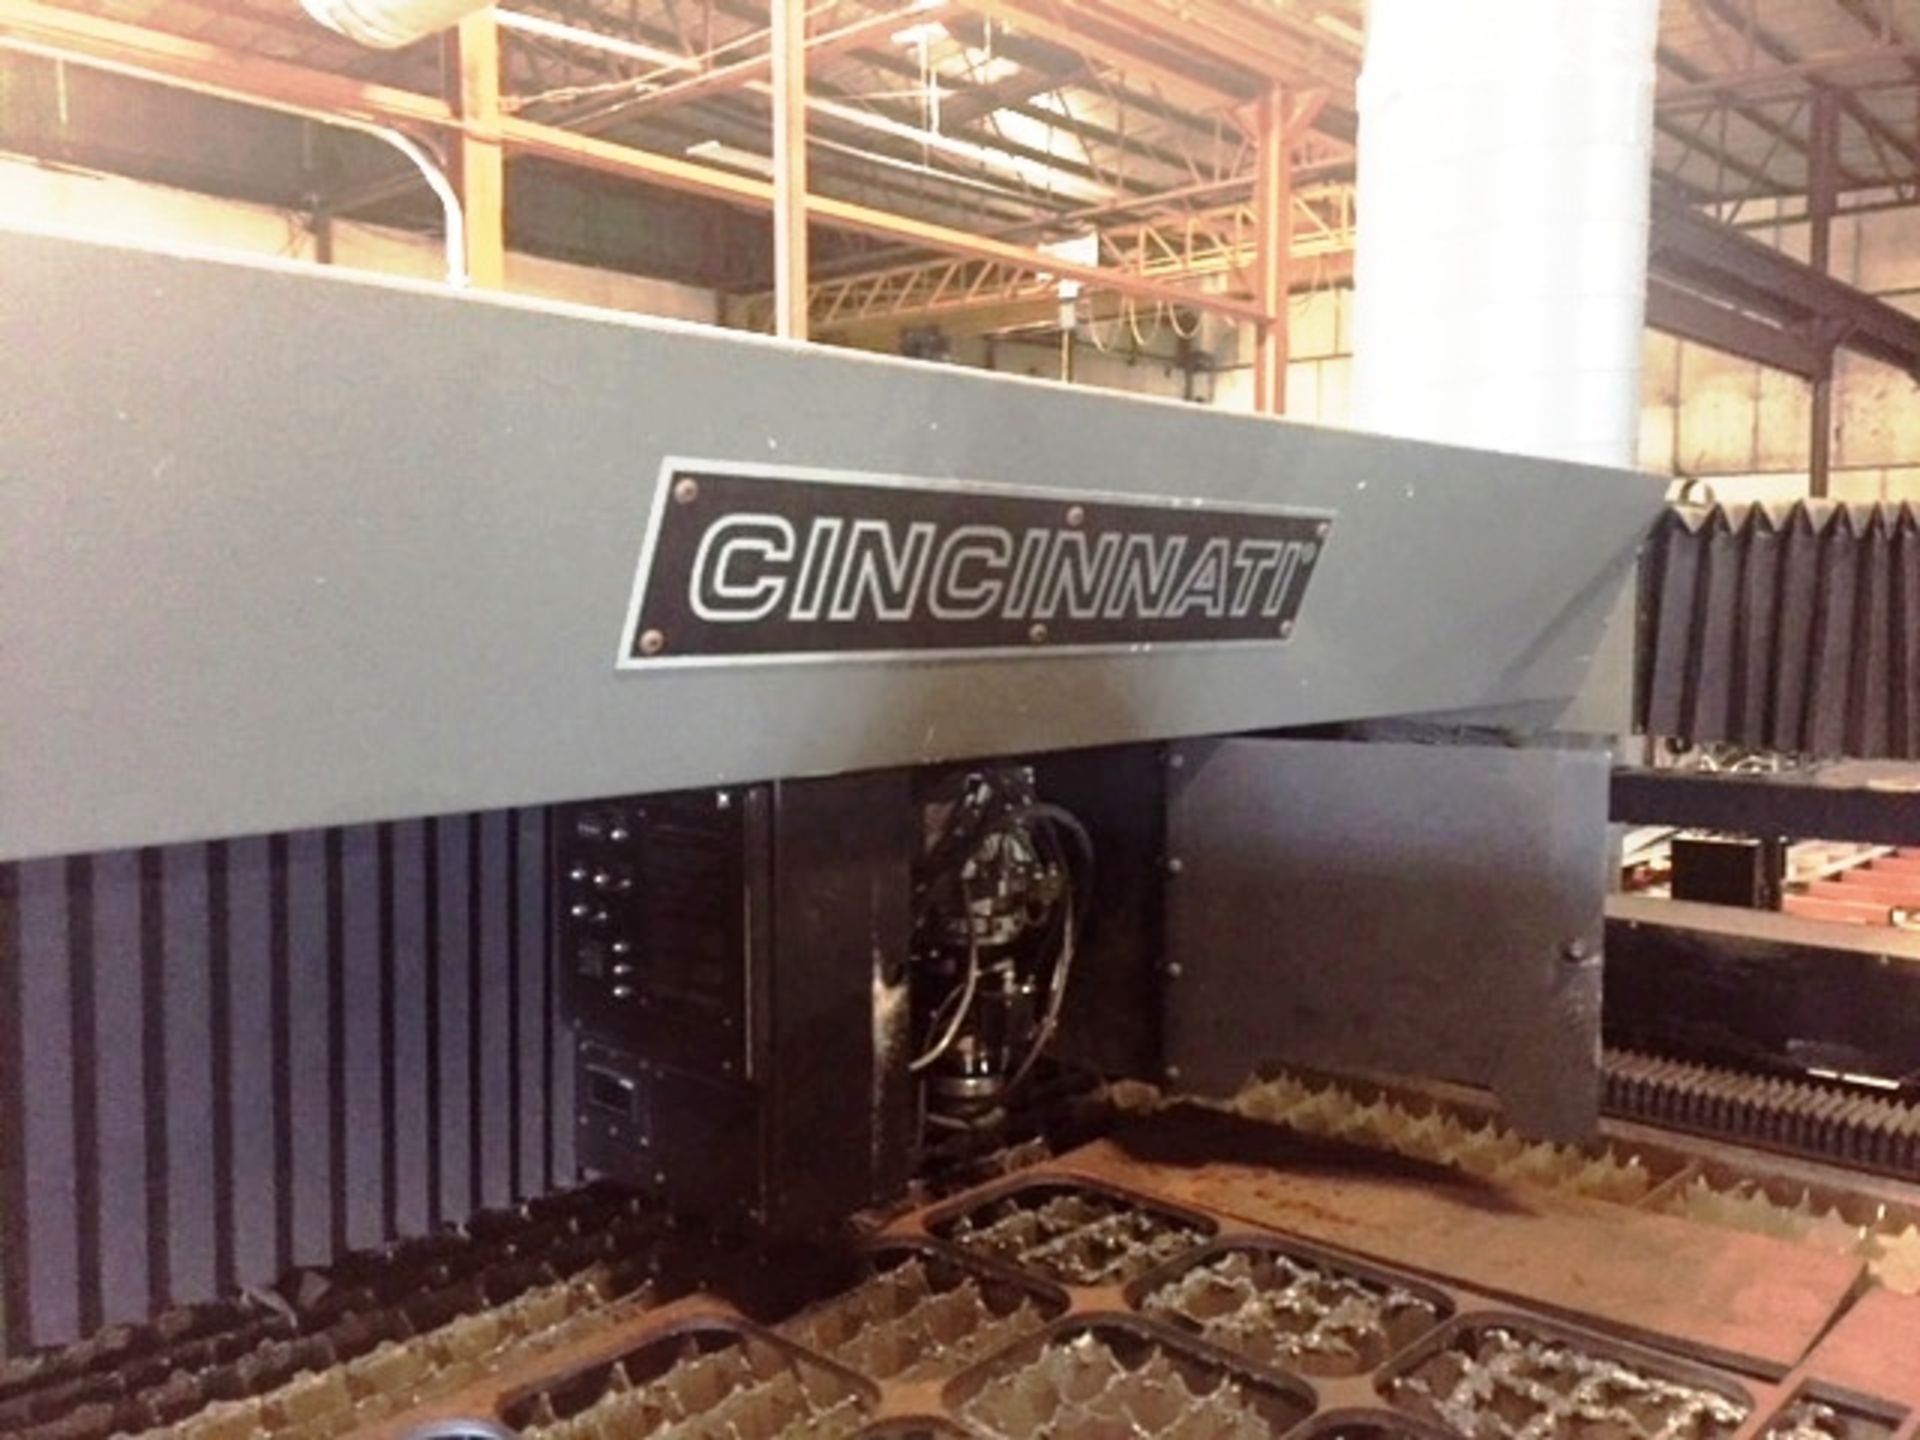 Cincinnati Model CL-6 2000 Watt CNC Laser Burning Machine - Image 3 of 5